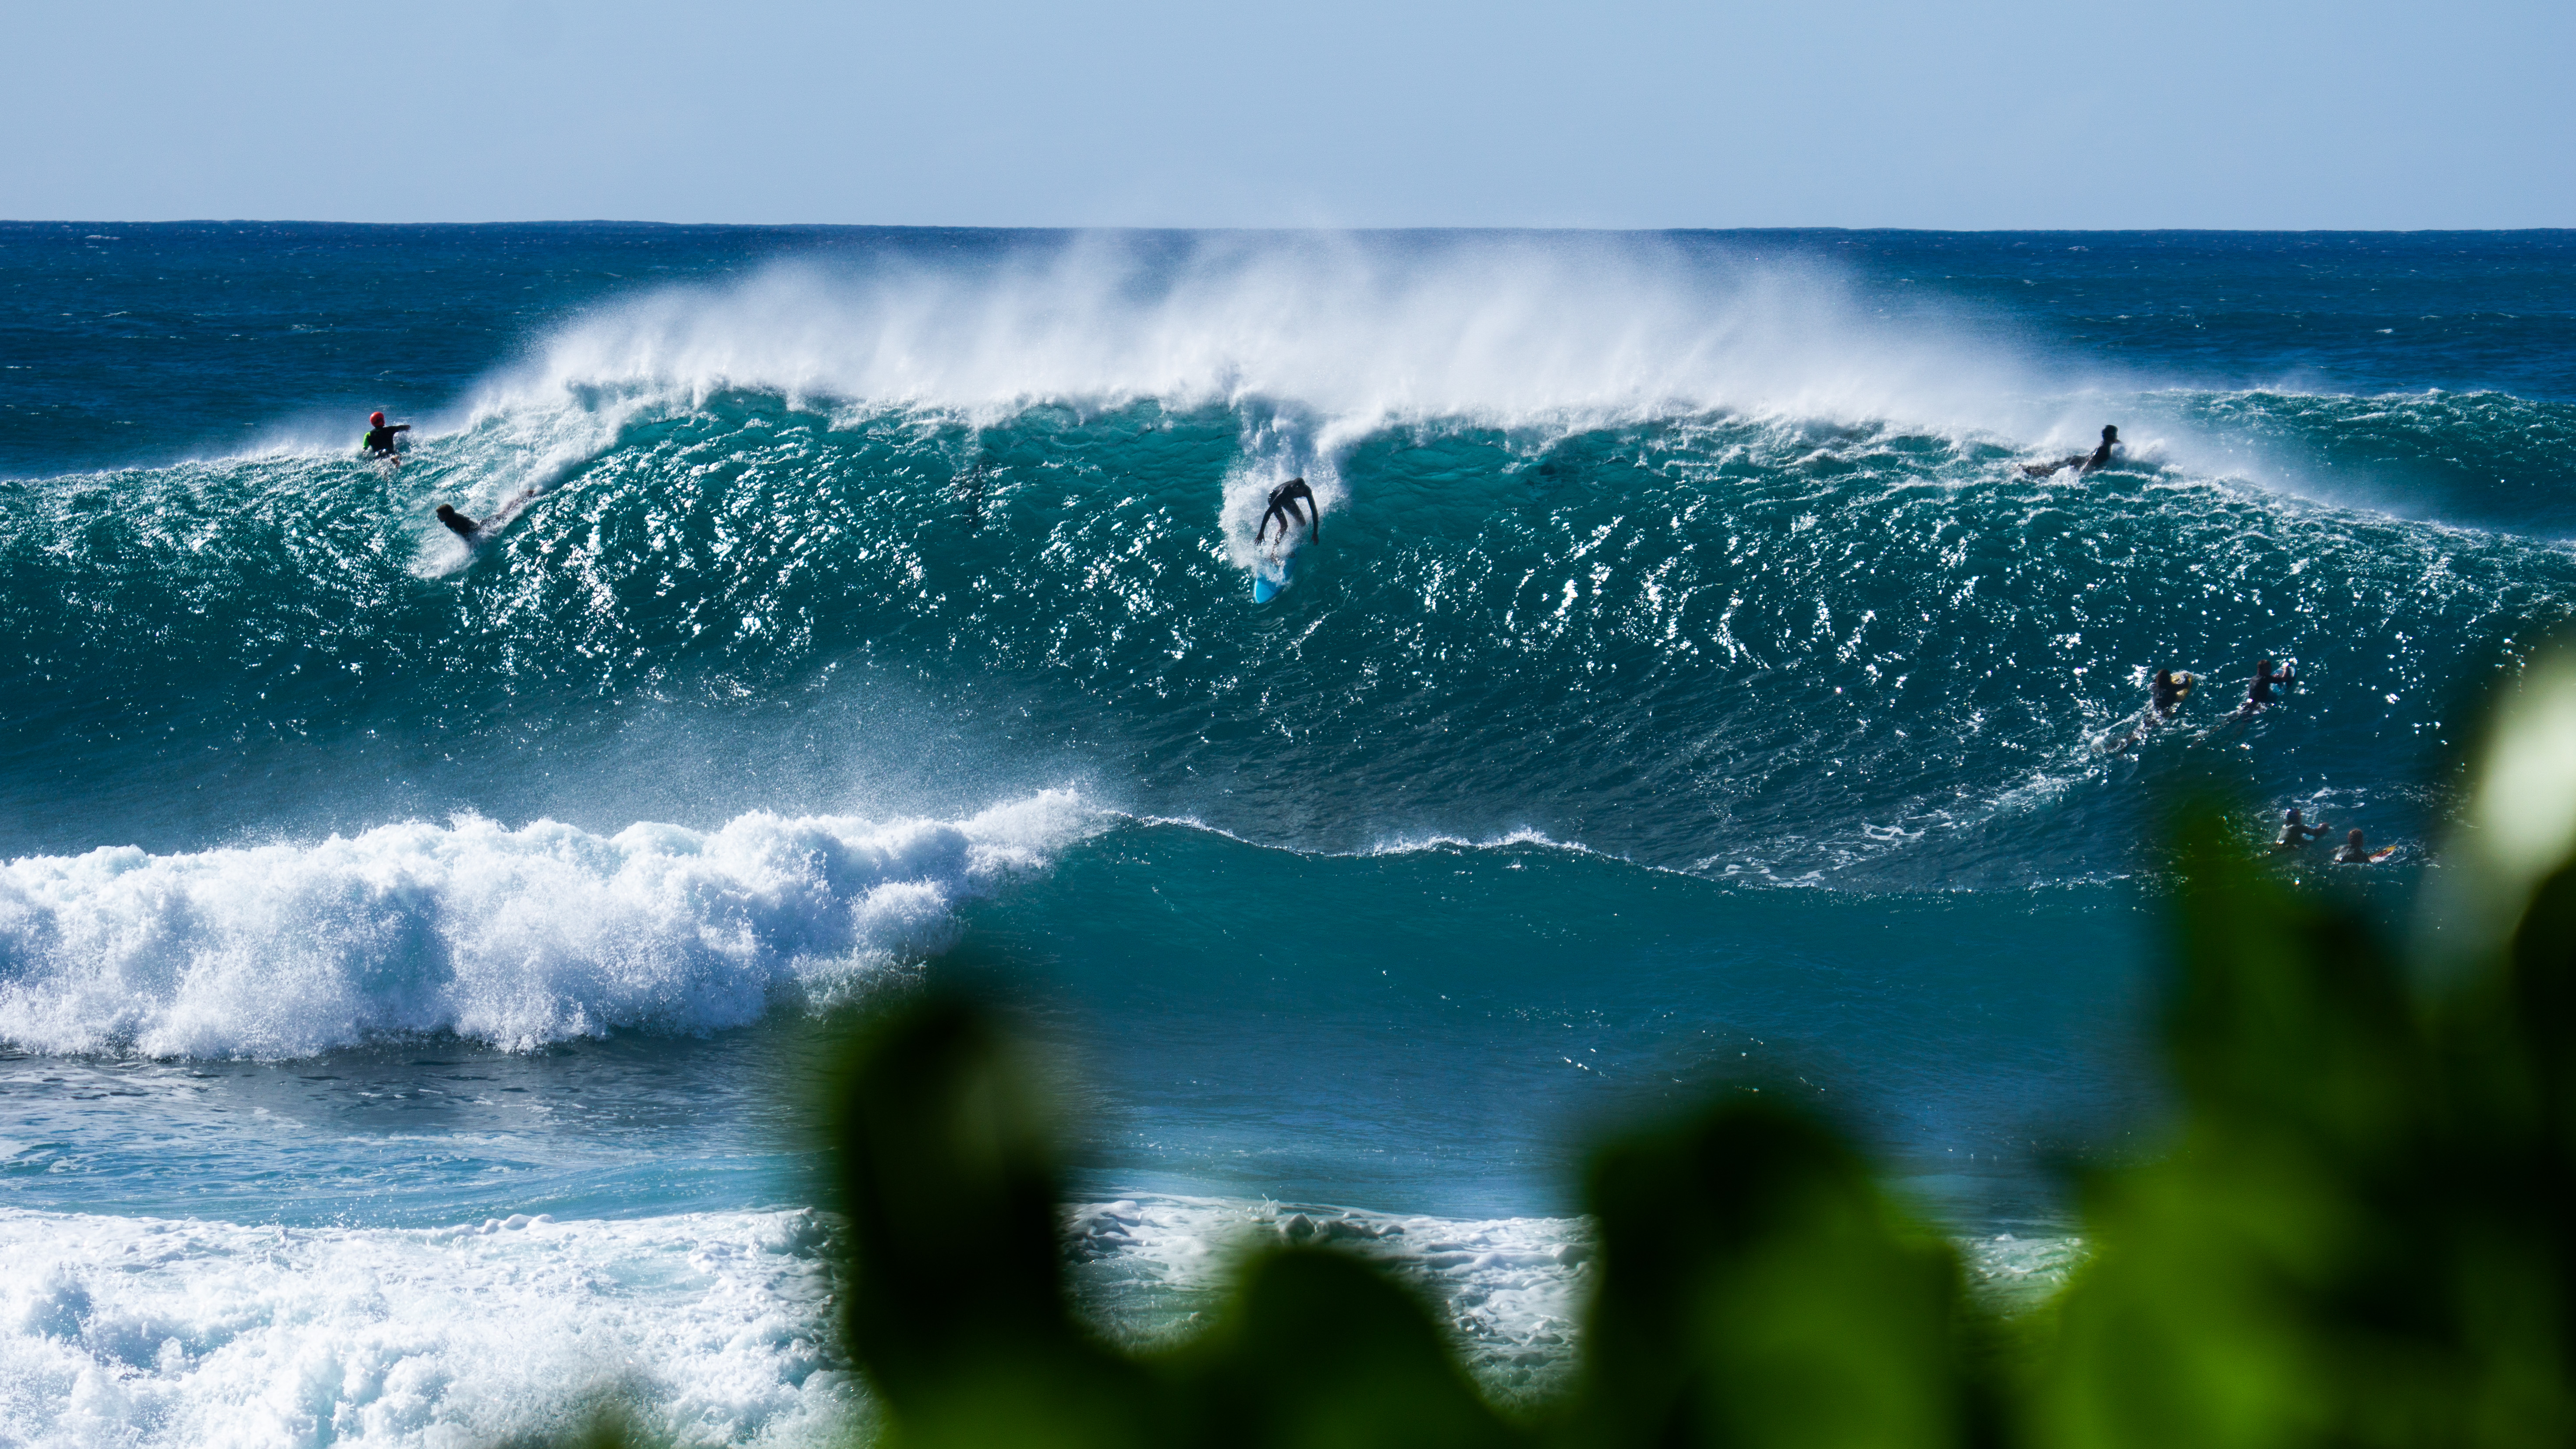 North Shore of Oahu - January 27, 2020 - @staugsurf - Surf Station Surf Report